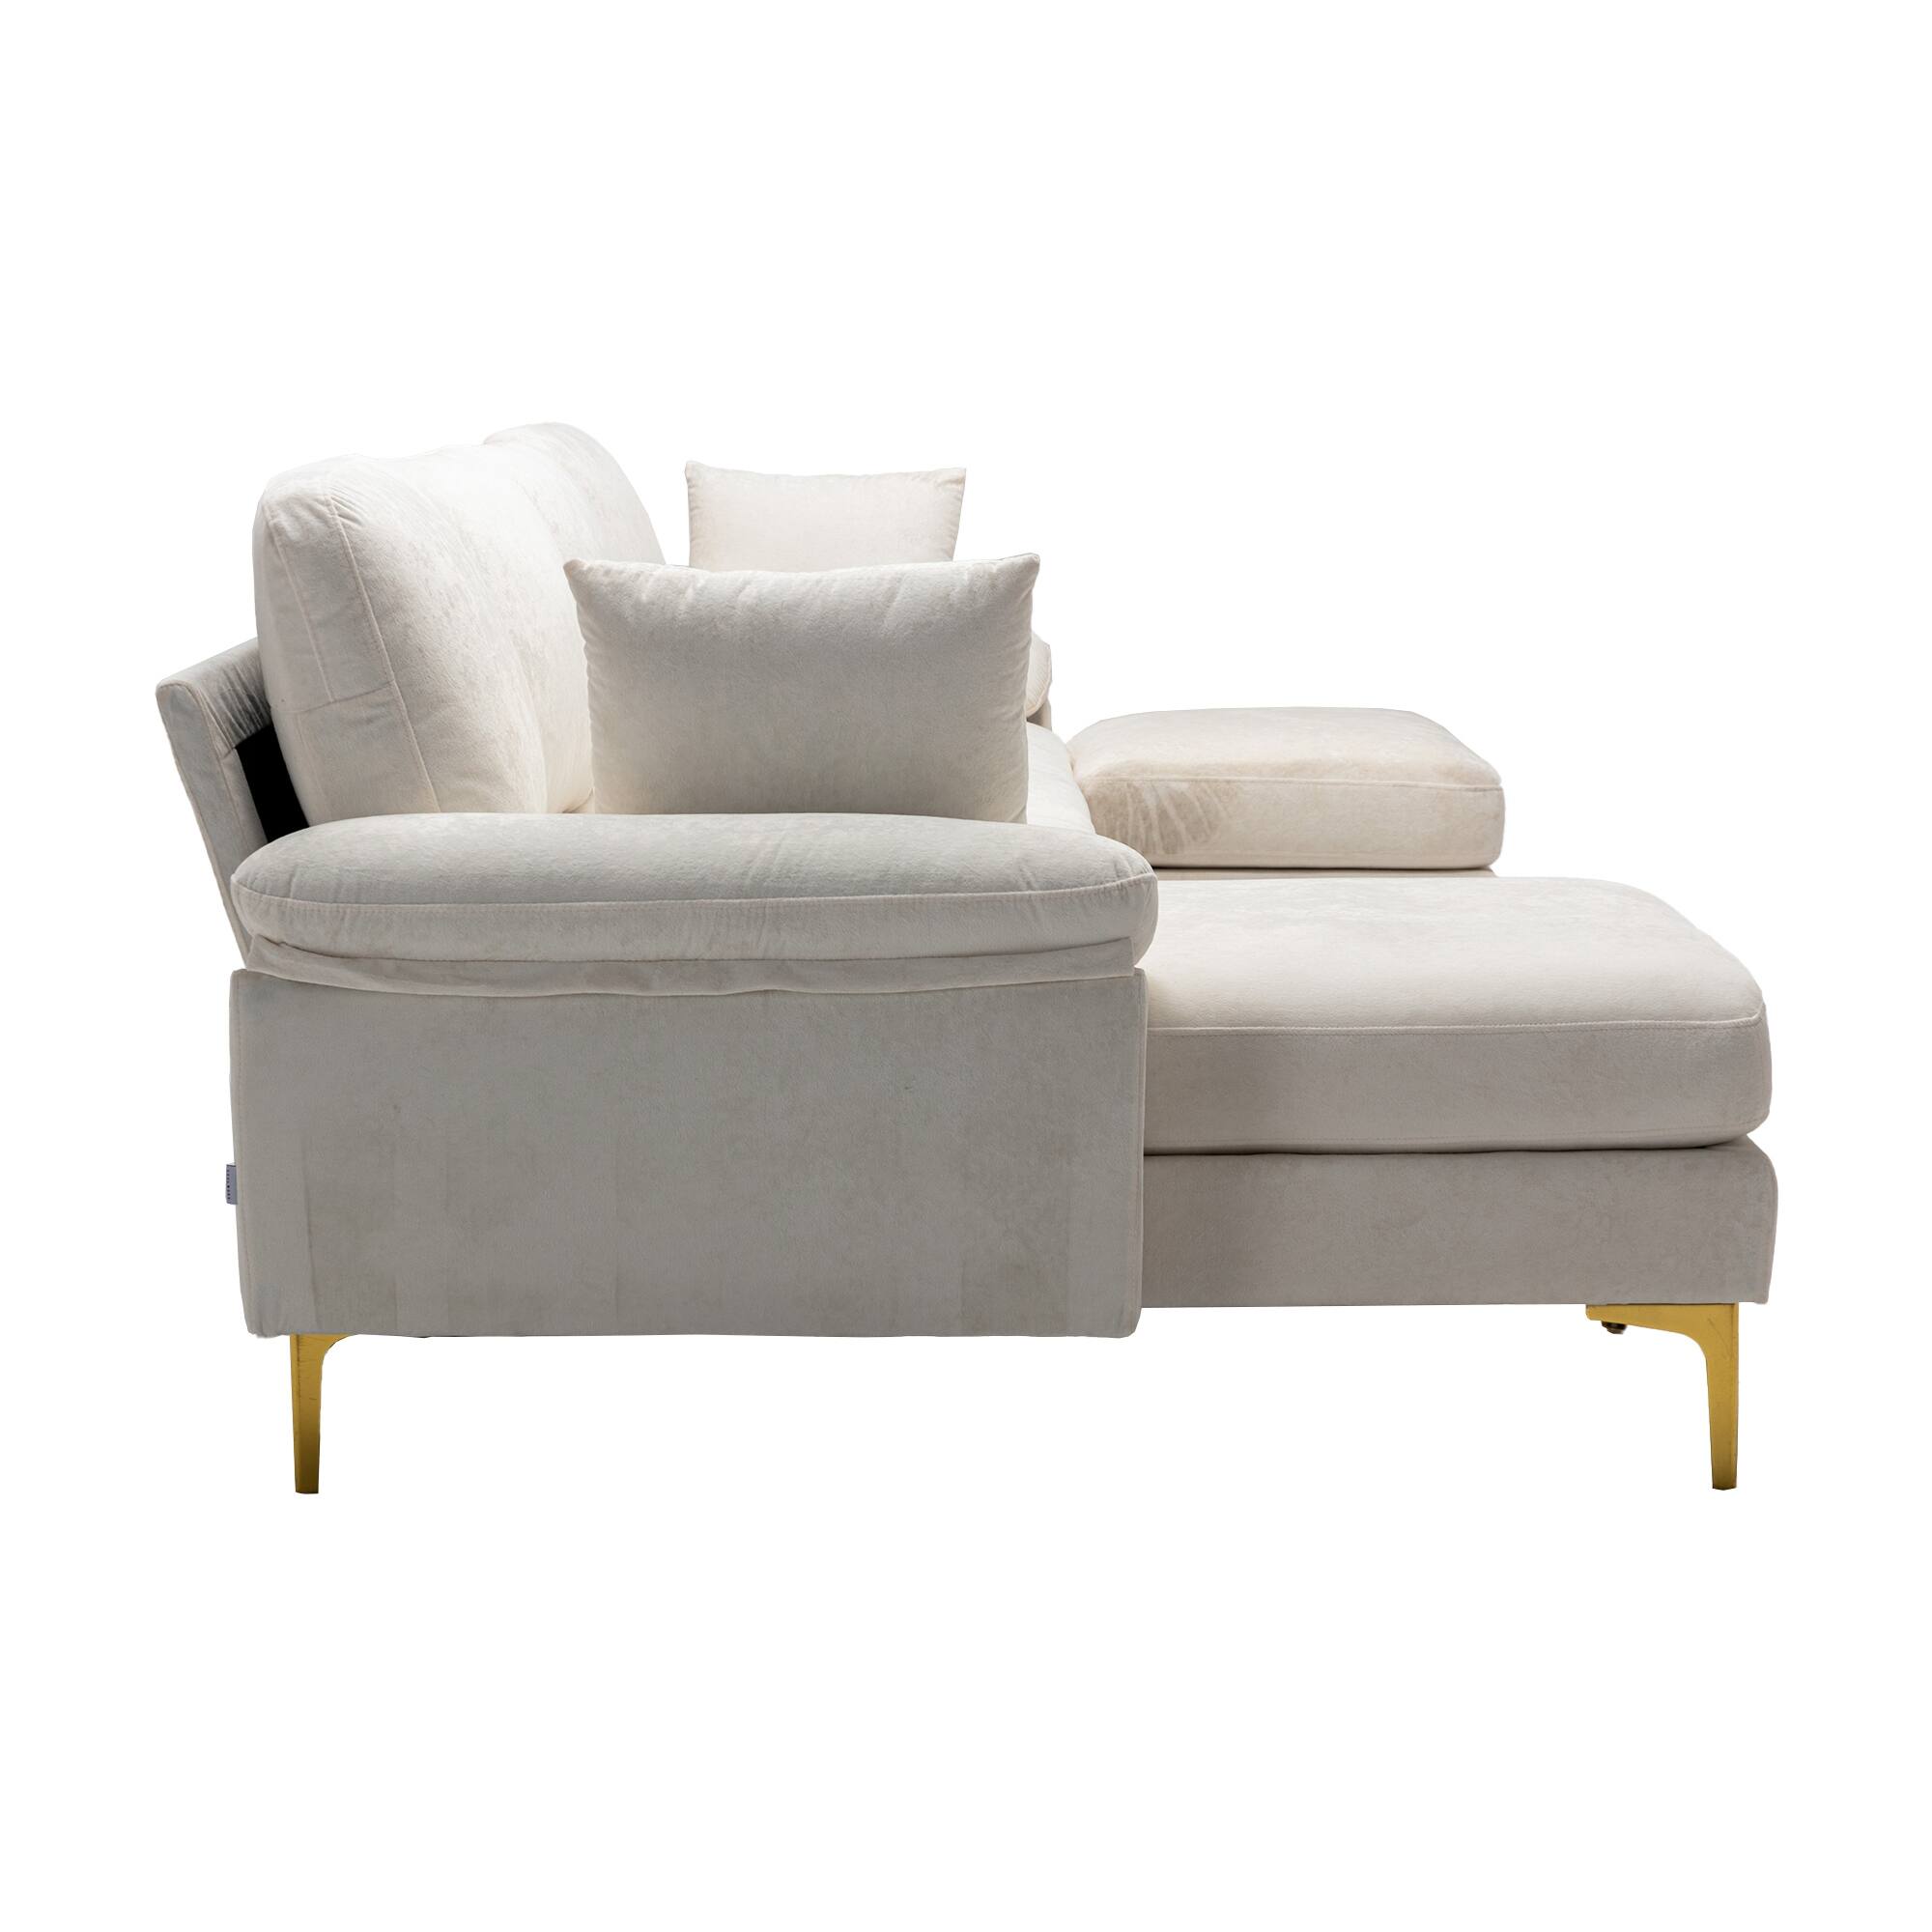 Mondern L- shape Accent Sofa Set/ Living Room Sofa Sectional Sofa Sets with Metal Leg and Ottoman, for Badroom